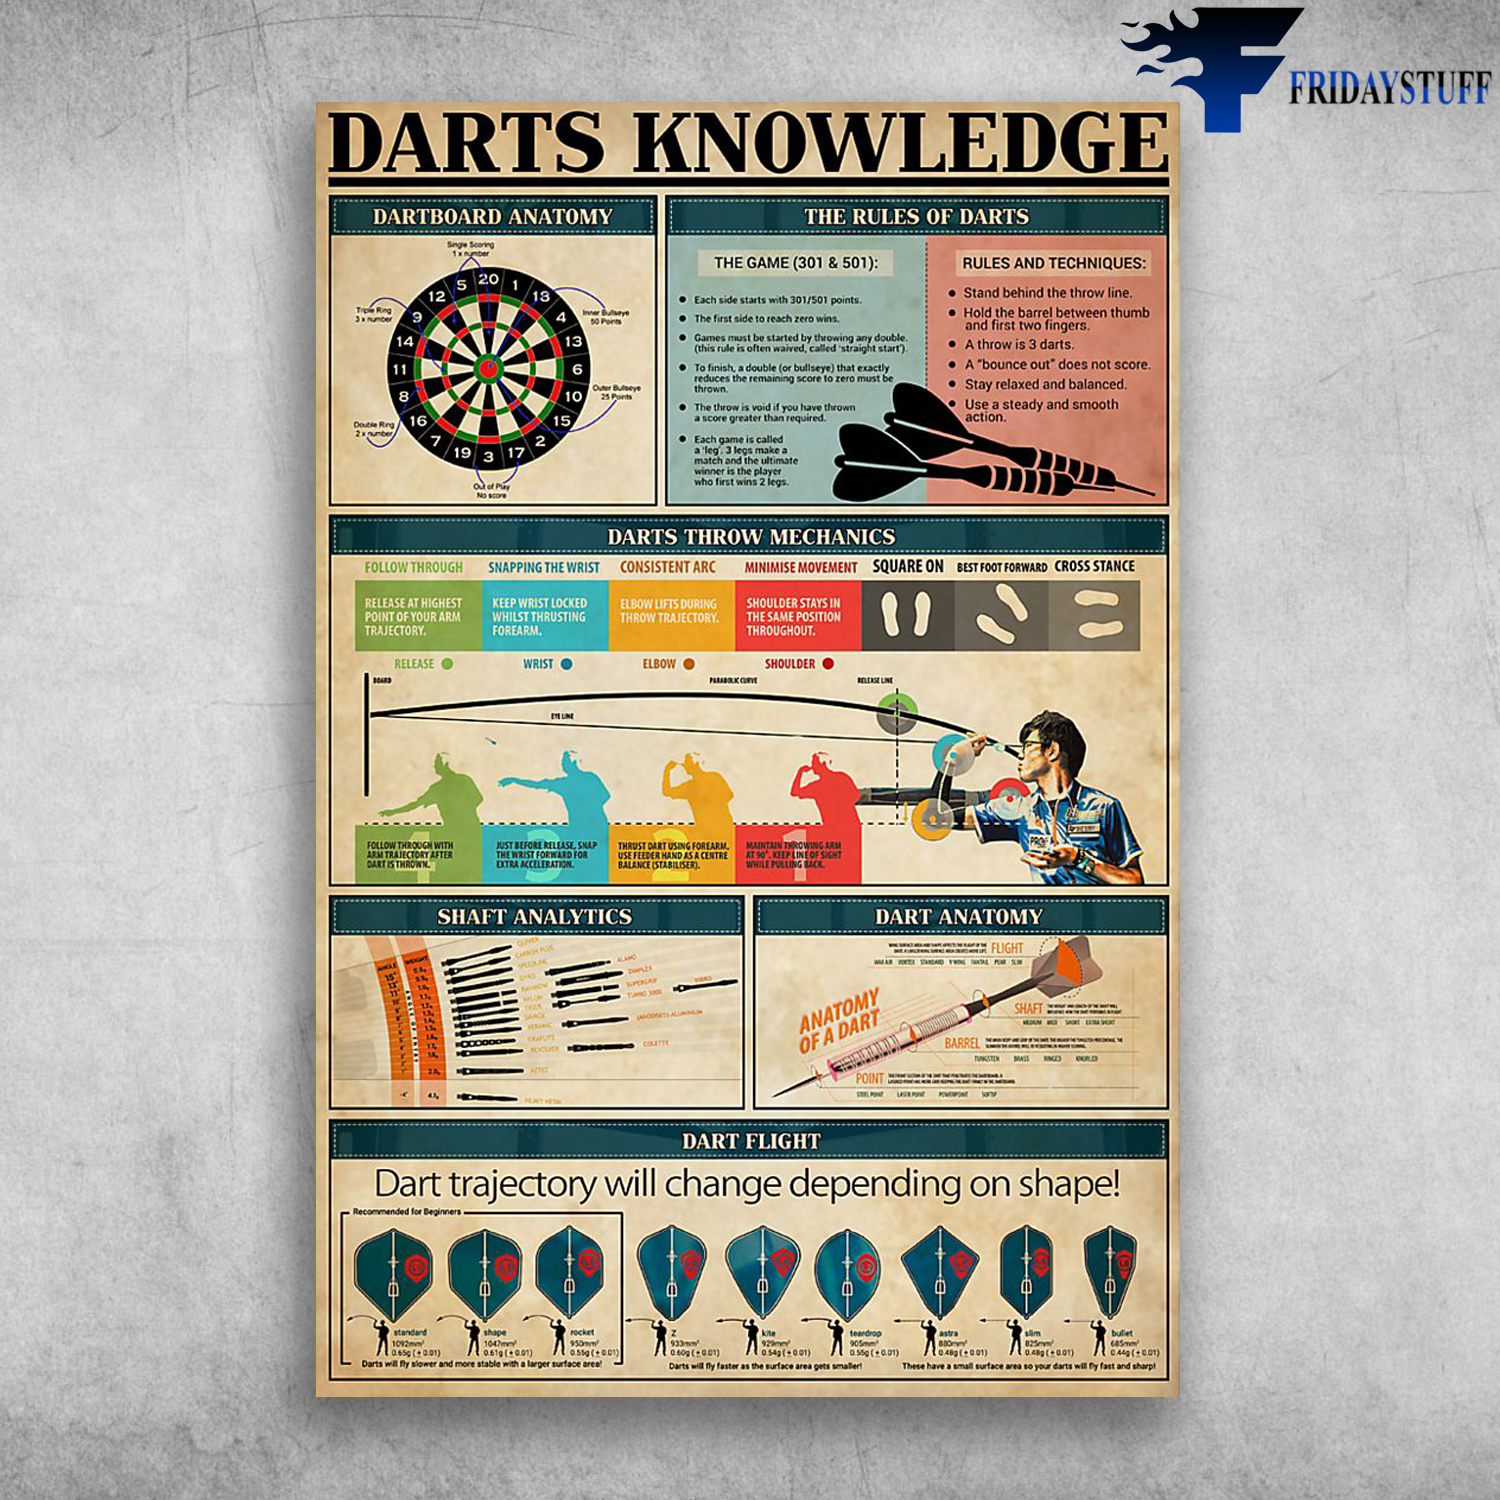 Darts Knowledge Dartboard Anatomy Darts Throw Mechnics The Rules Of Darts